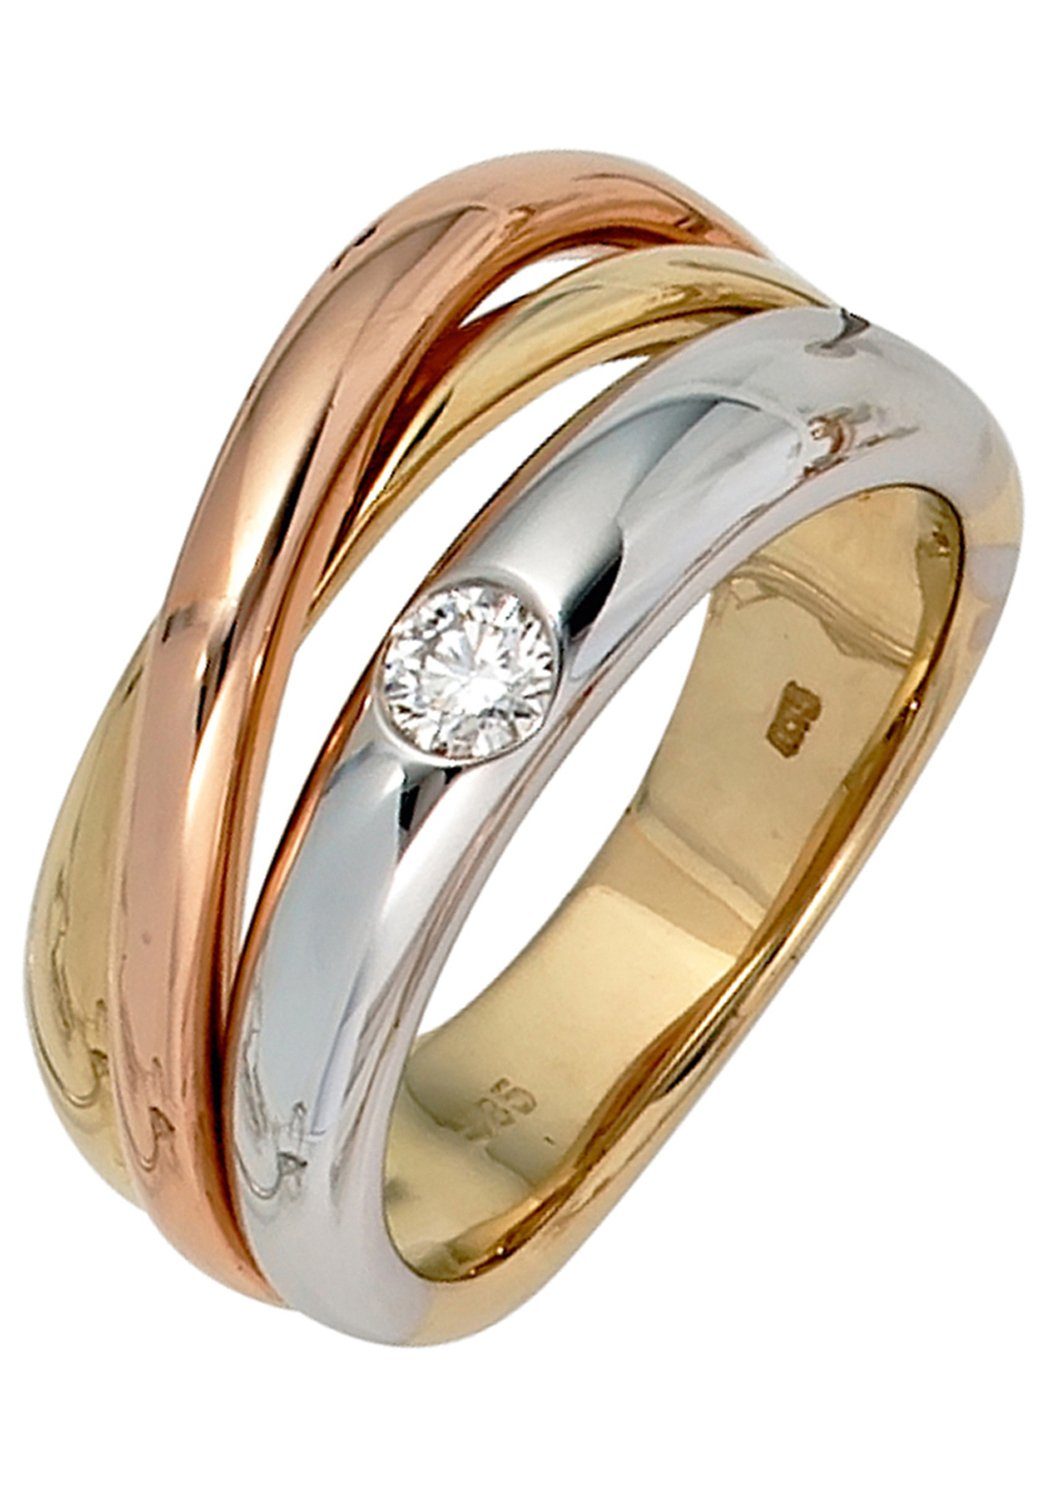 JOBO Diamantring, 585 Gold dreifarbig tricolor mit Diamant 0,15 ct.